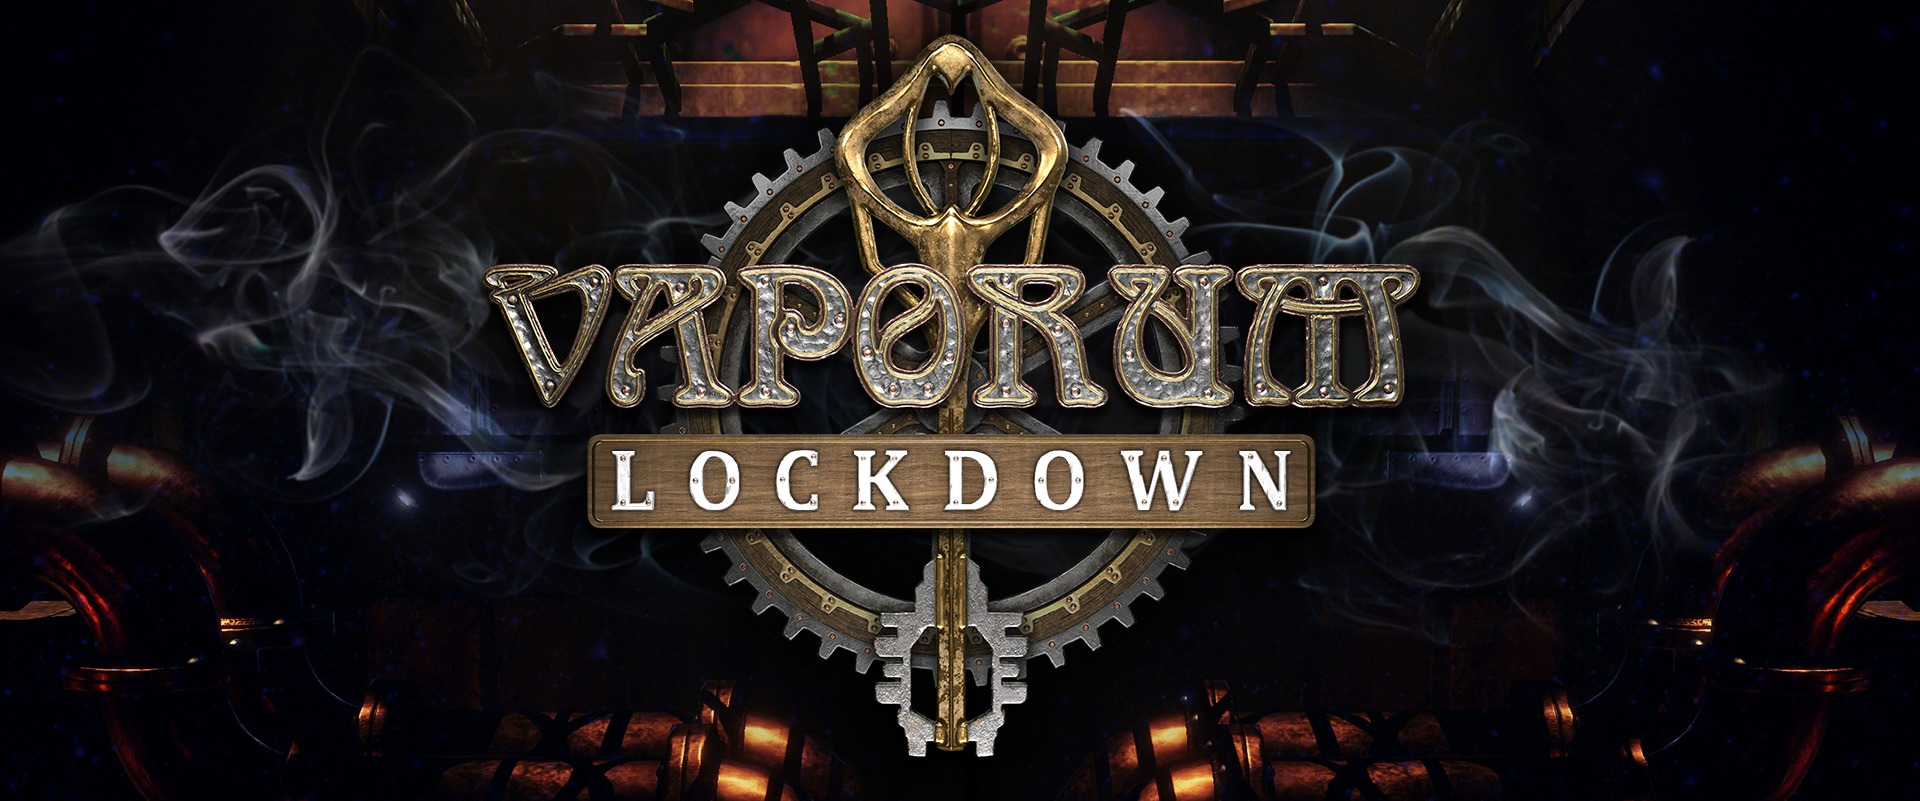 Vaporum: Lockdown is coming! (New Game Announcement)